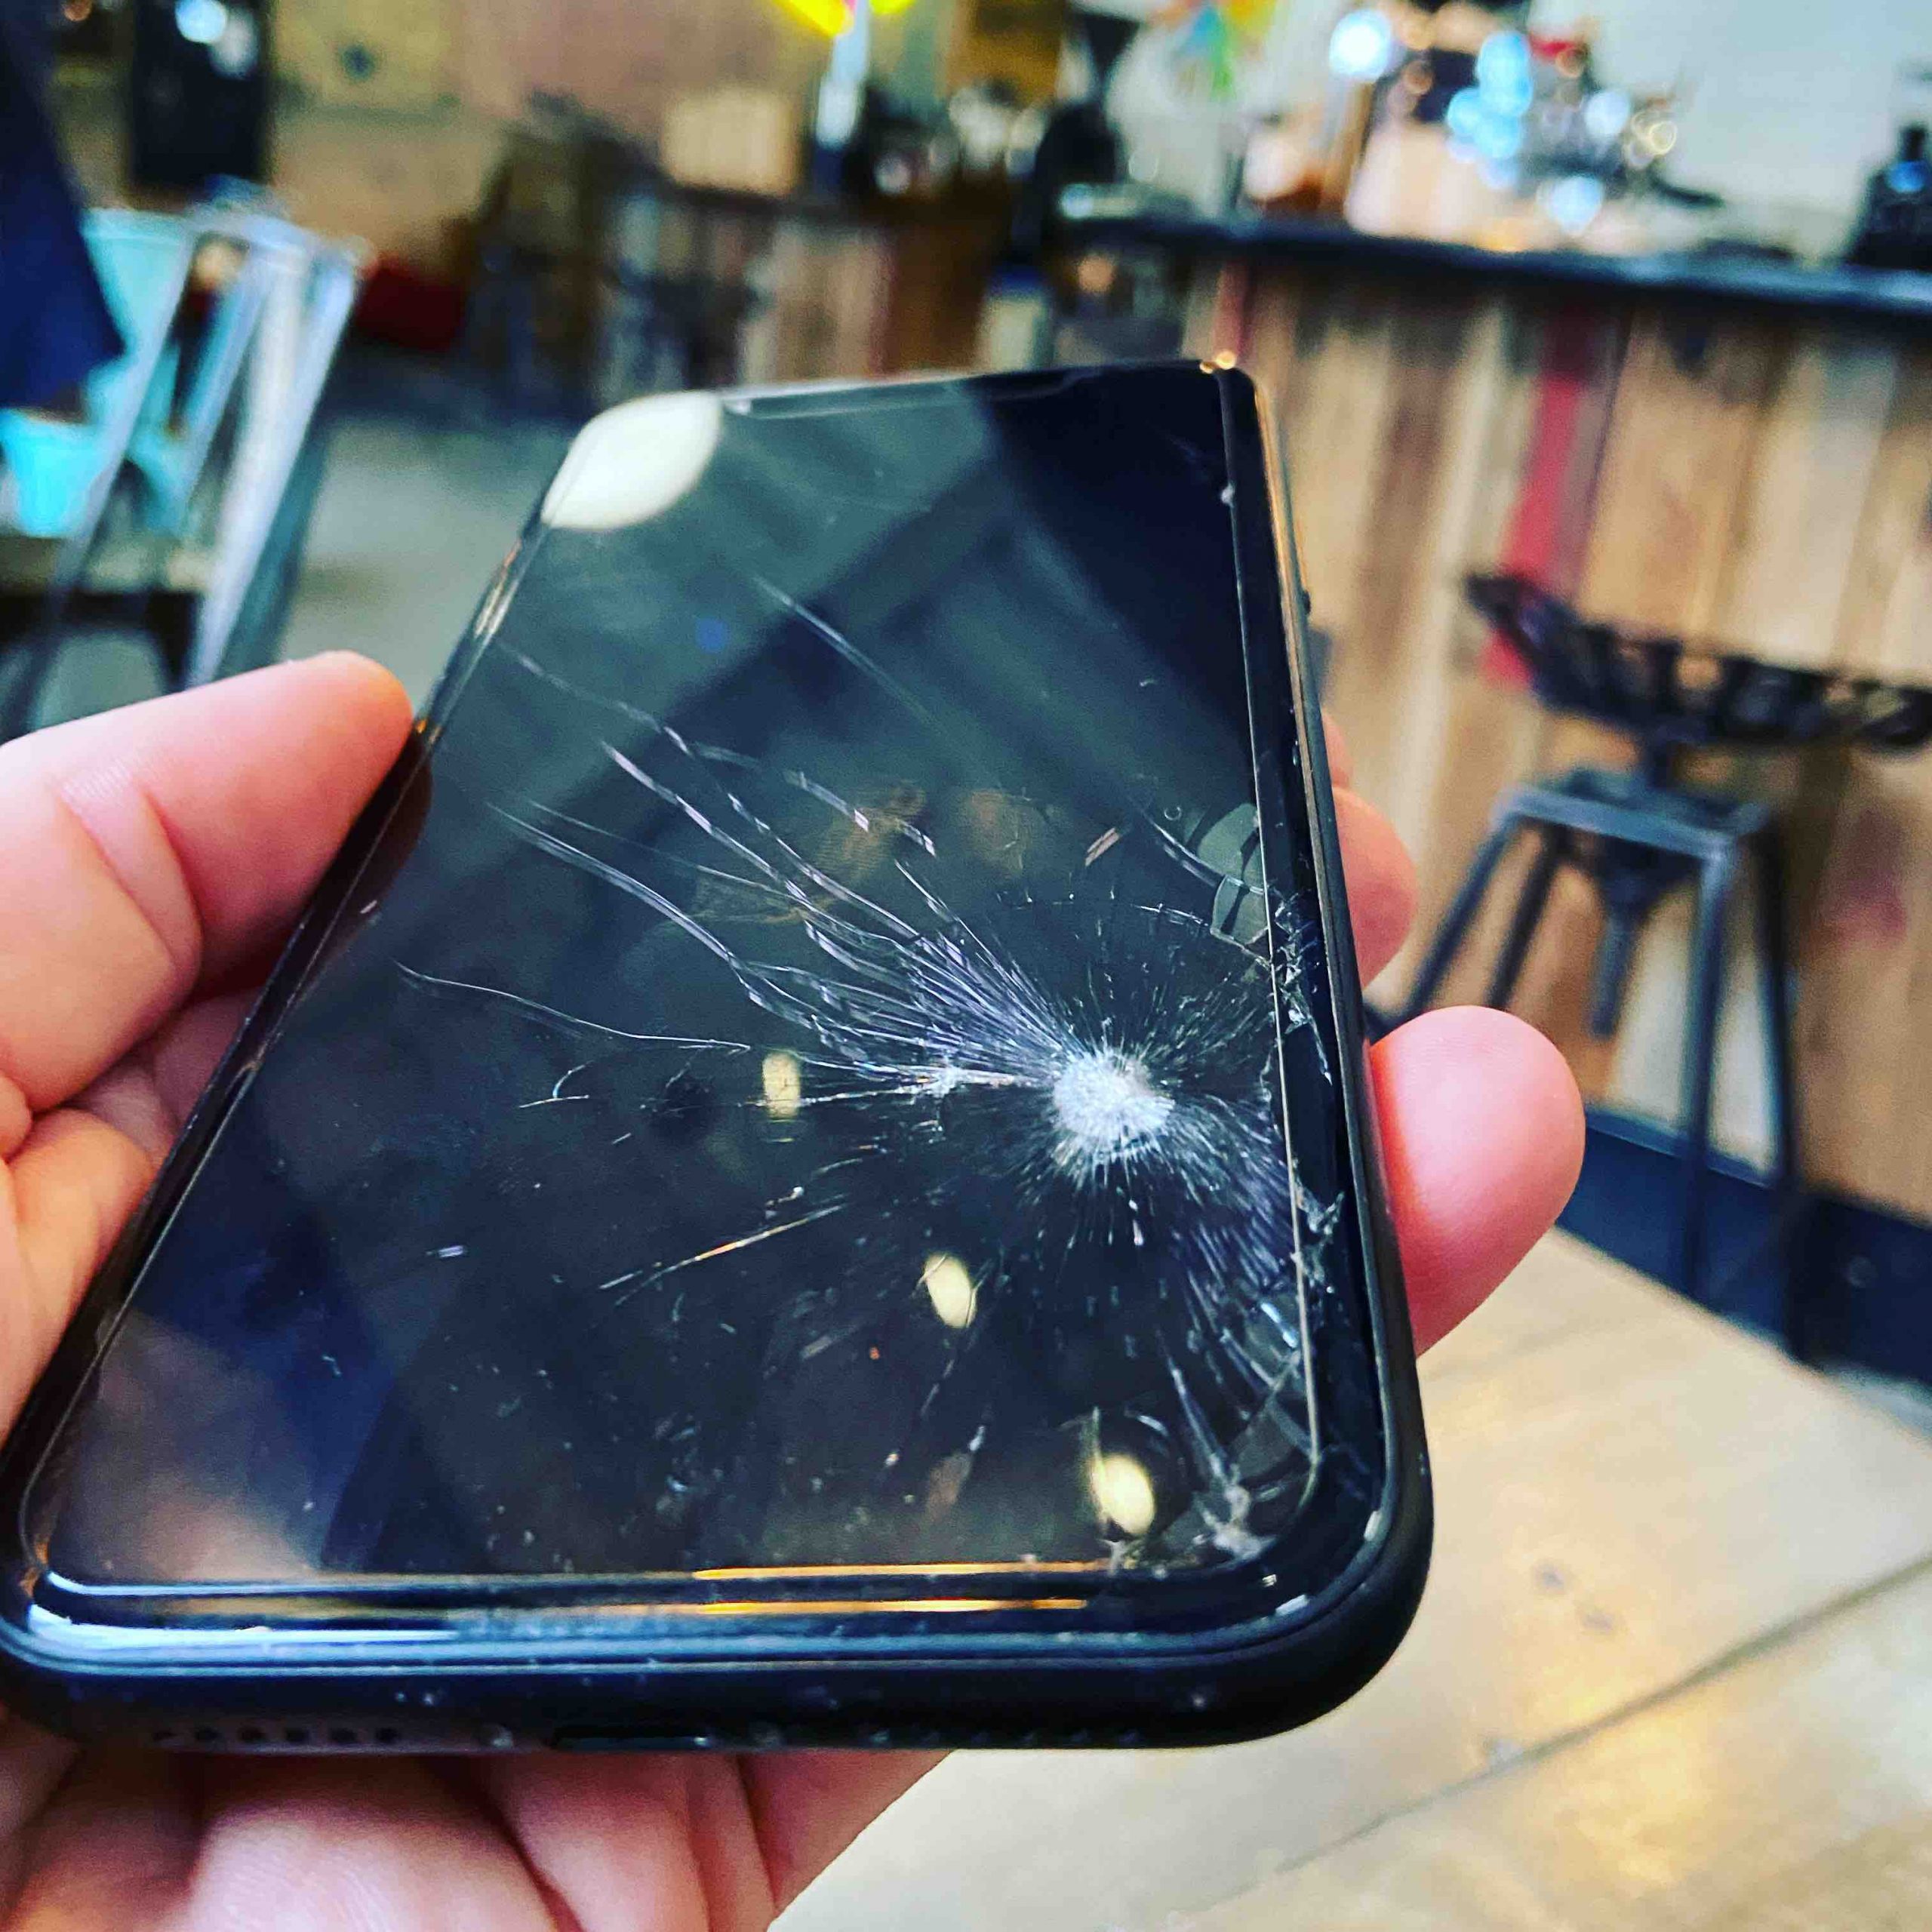 cracked-phone-screen-iphone-screen-repair-costs-options